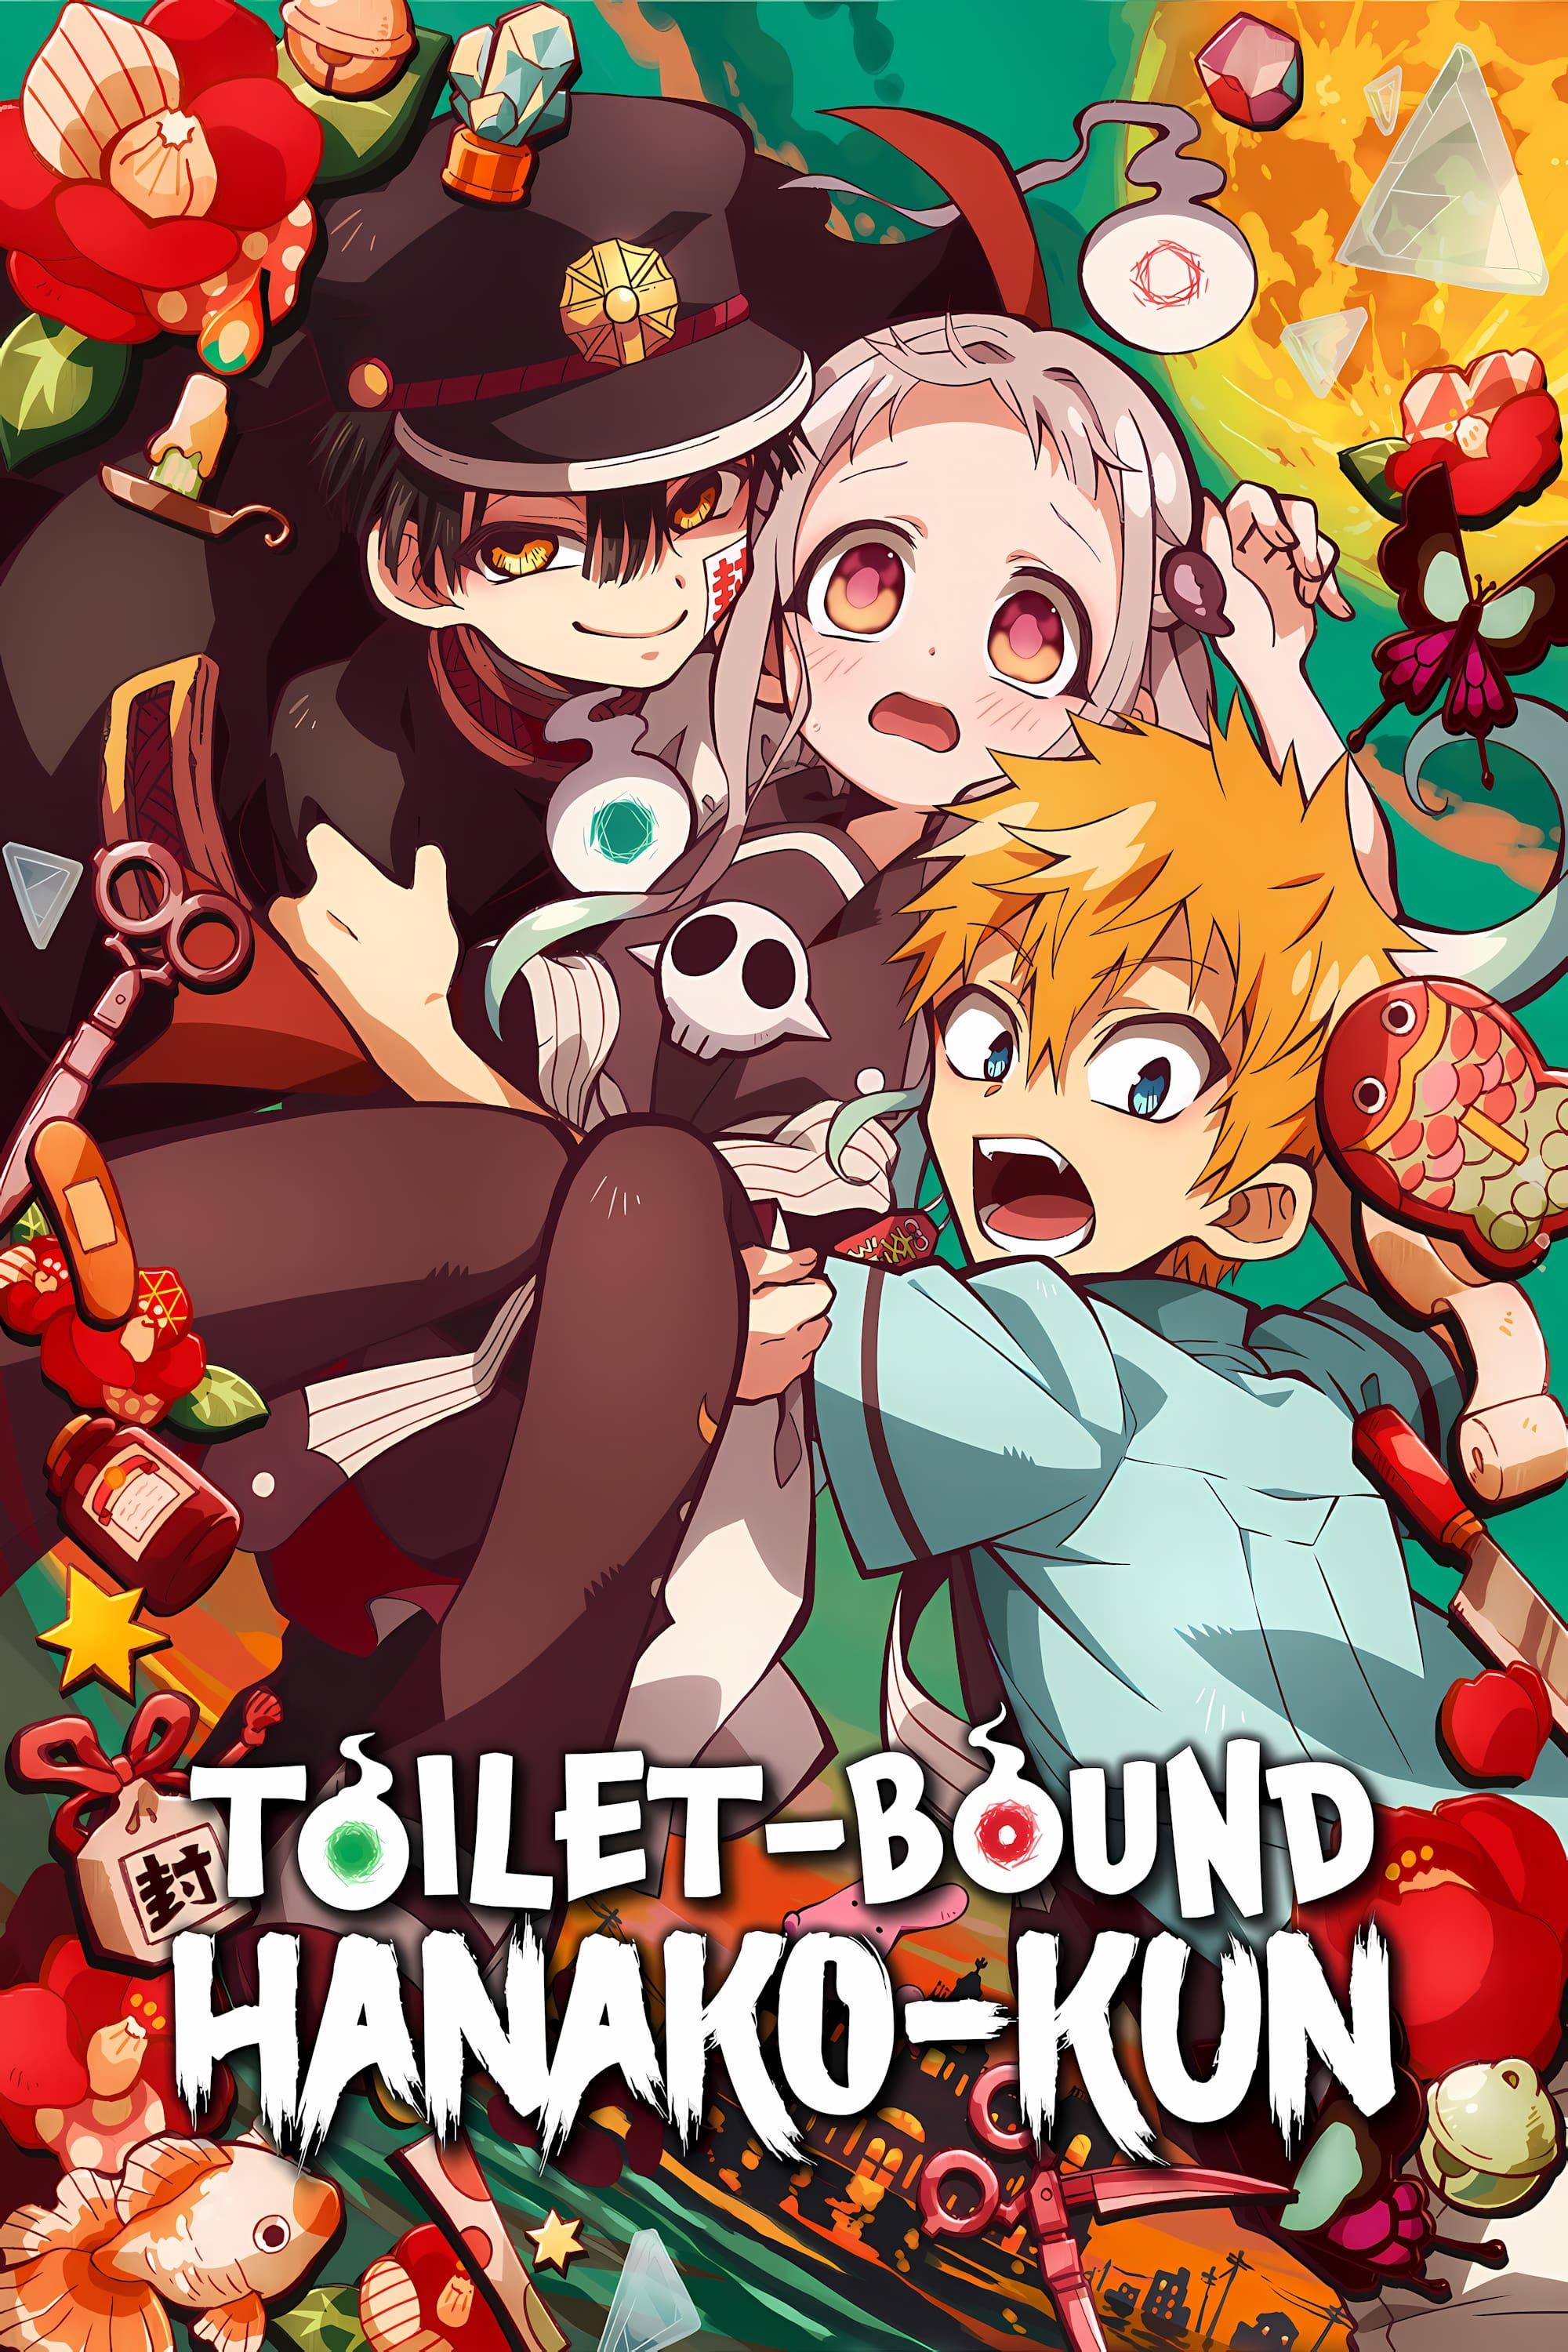 Toilet-Bound Hanako-kun poster